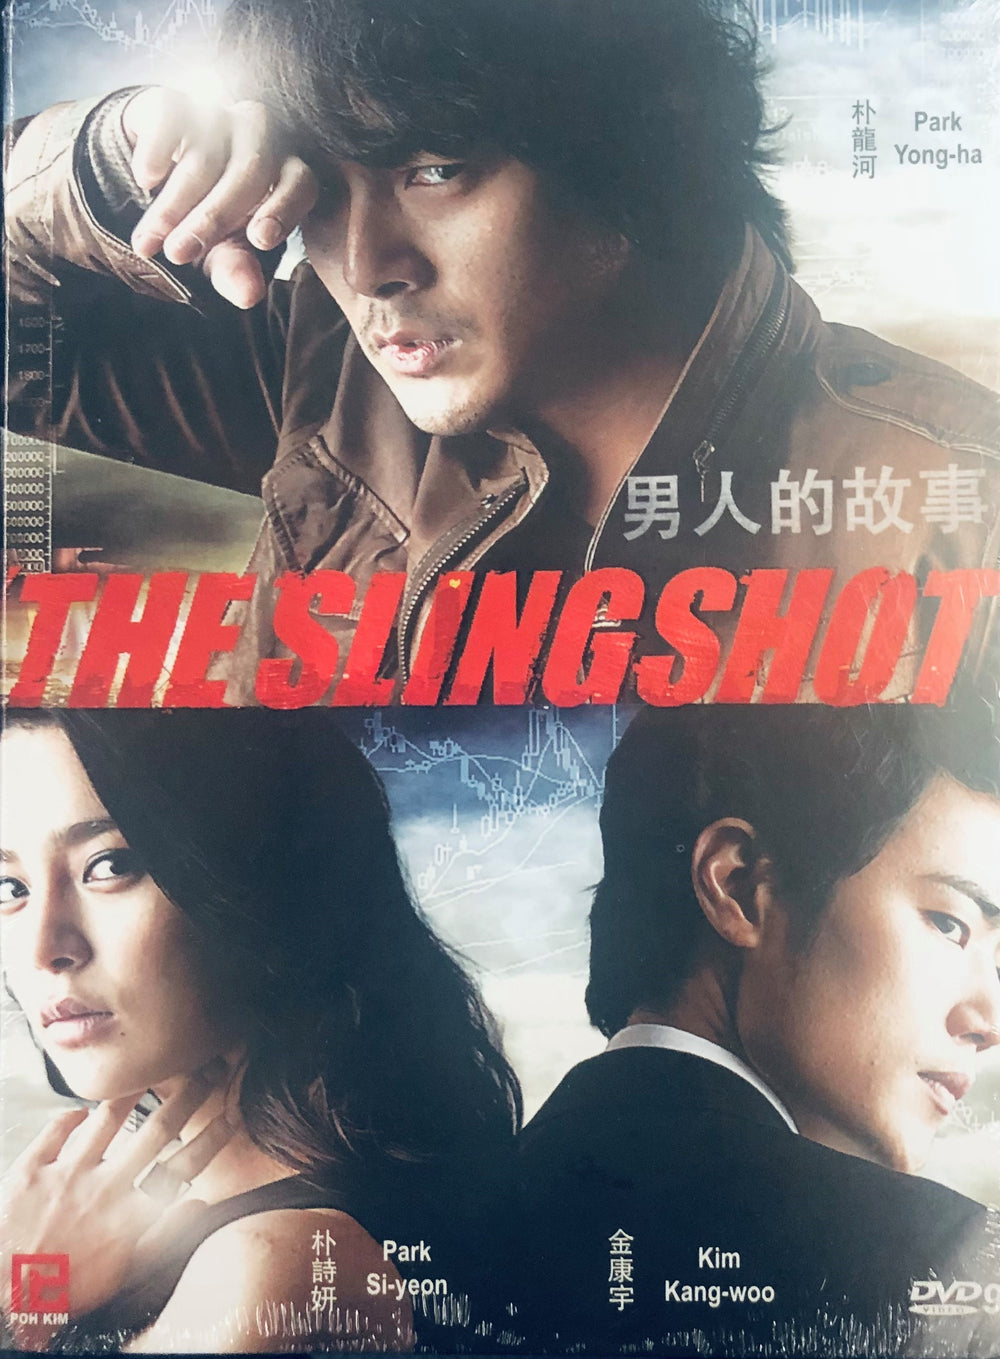 THE SLINGSHOT 2009 ( KOREAN DRAMA) DVD 1-20 EPISODES ENGLISH SUB (REGION FREE)